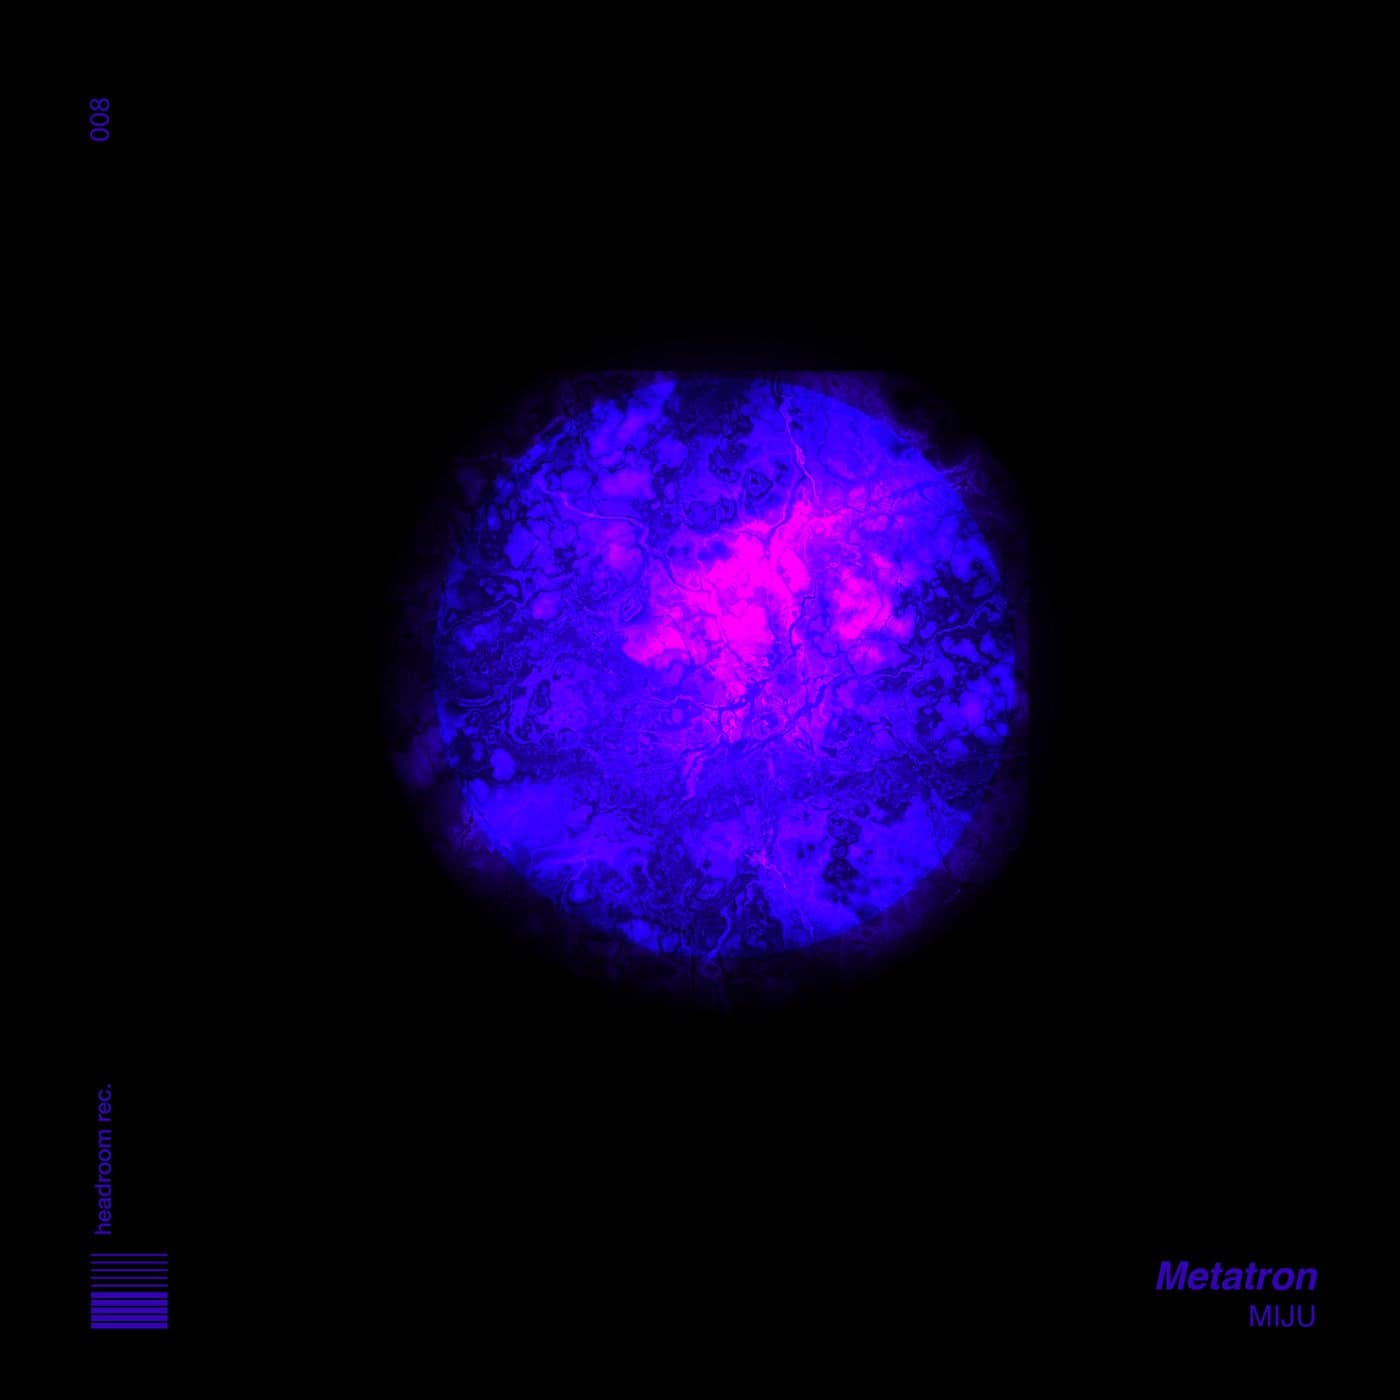 image cover: MIJU - Metatron / HEAD008